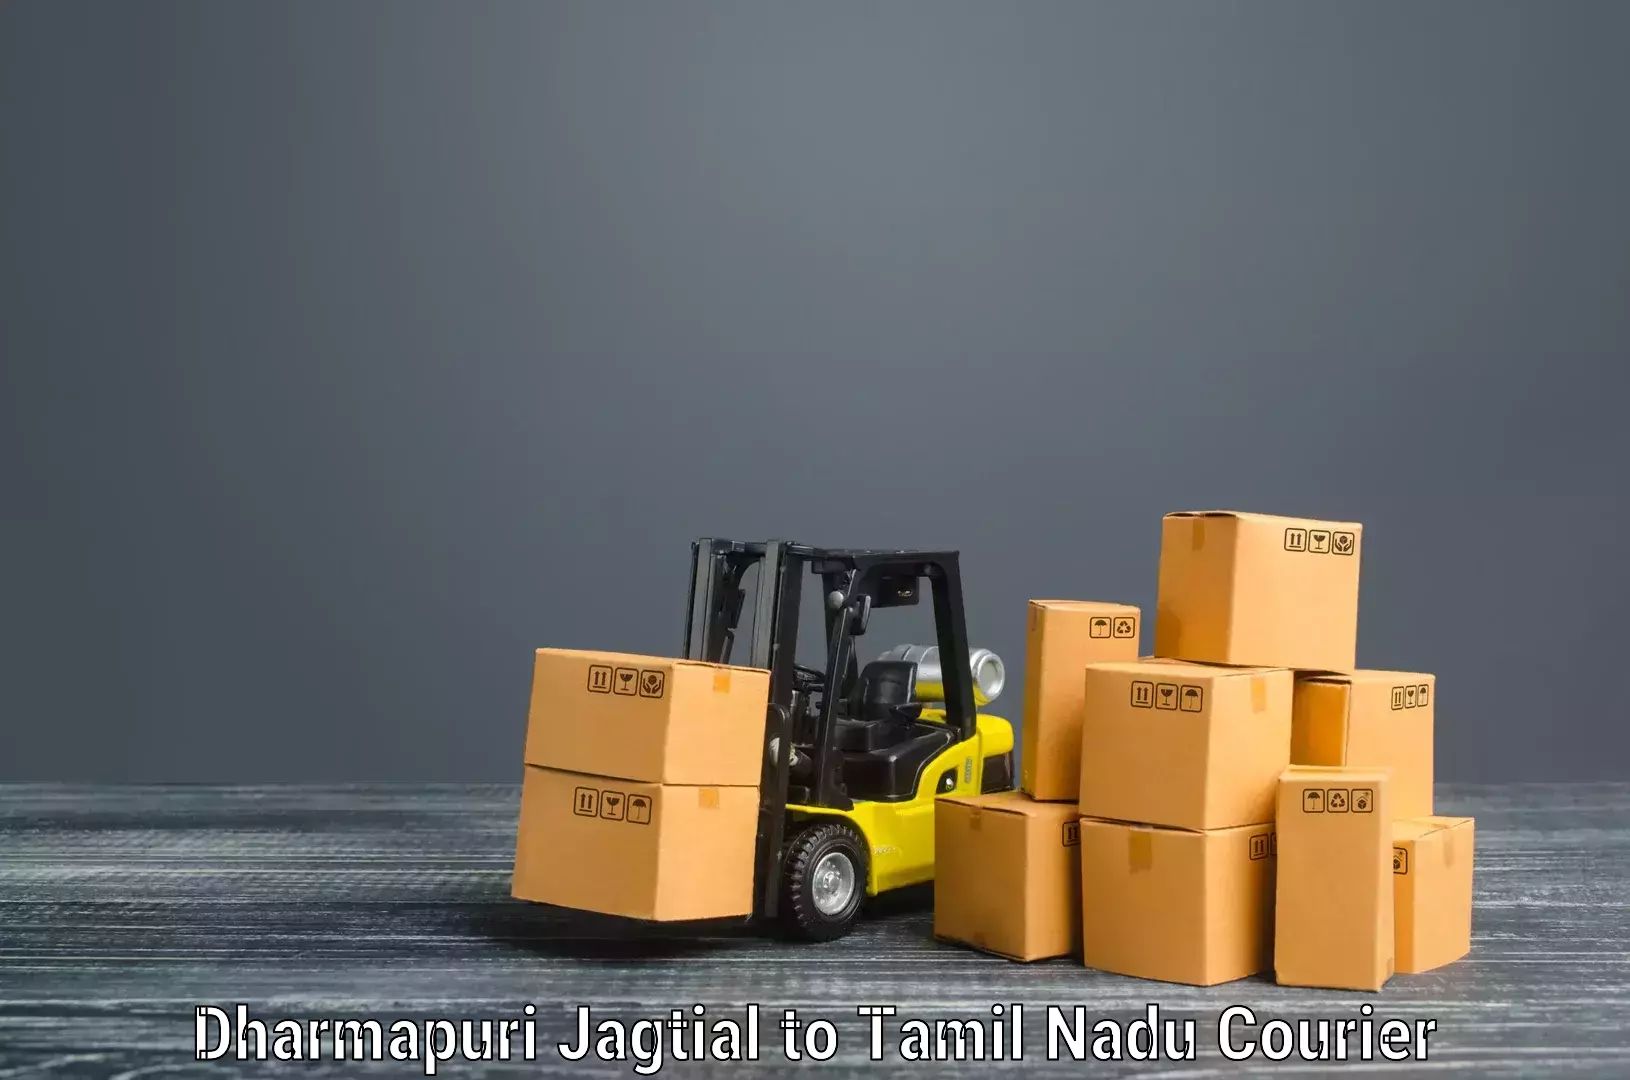 Professional moving company Dharmapuri Jagtial to Gudiyattam